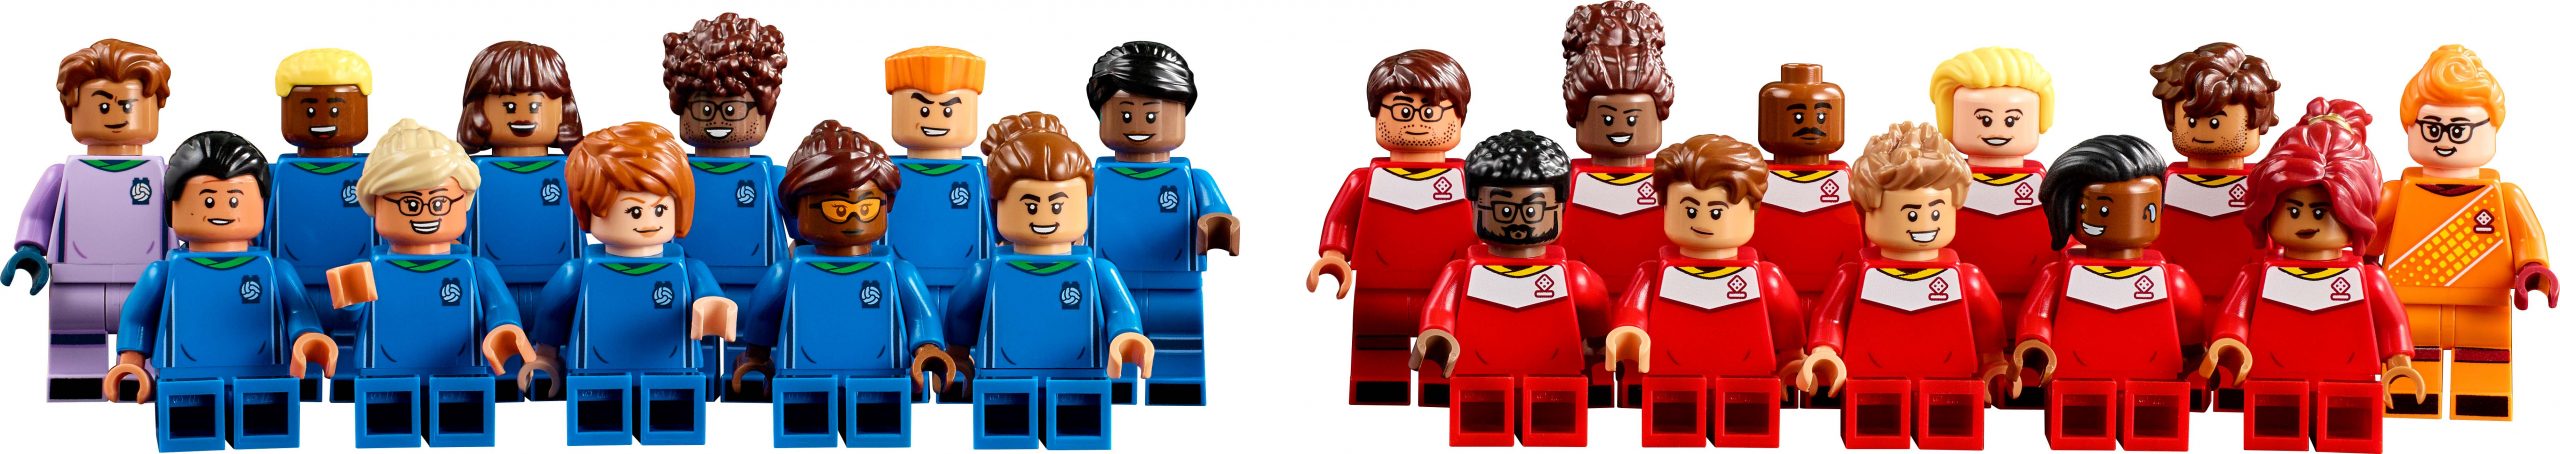 LEGO IDEAS 21337 Football